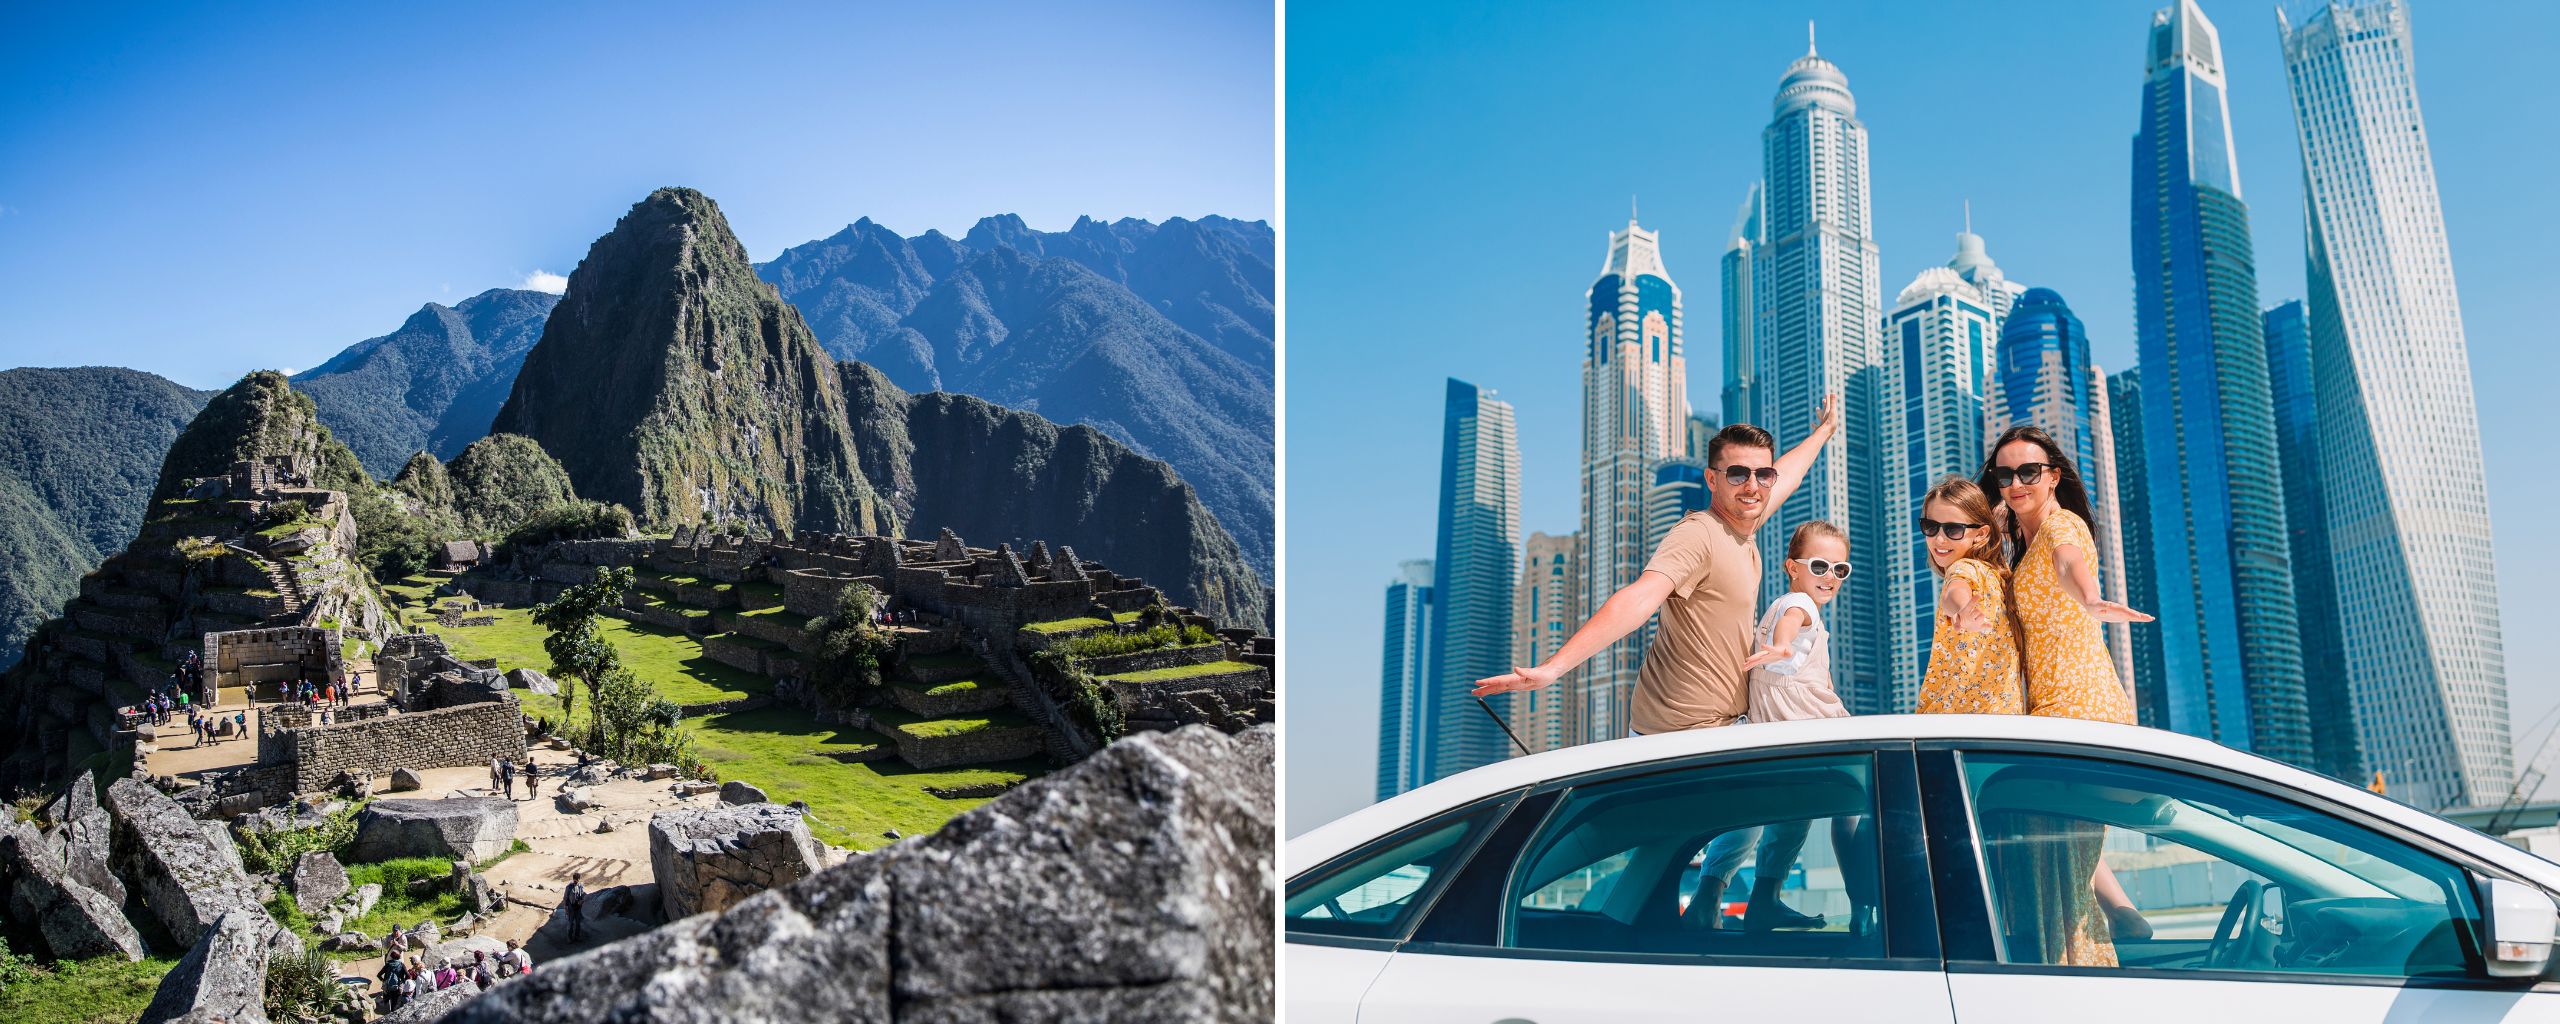 Visa Exemption Established for Travelers Between Peru and UAE